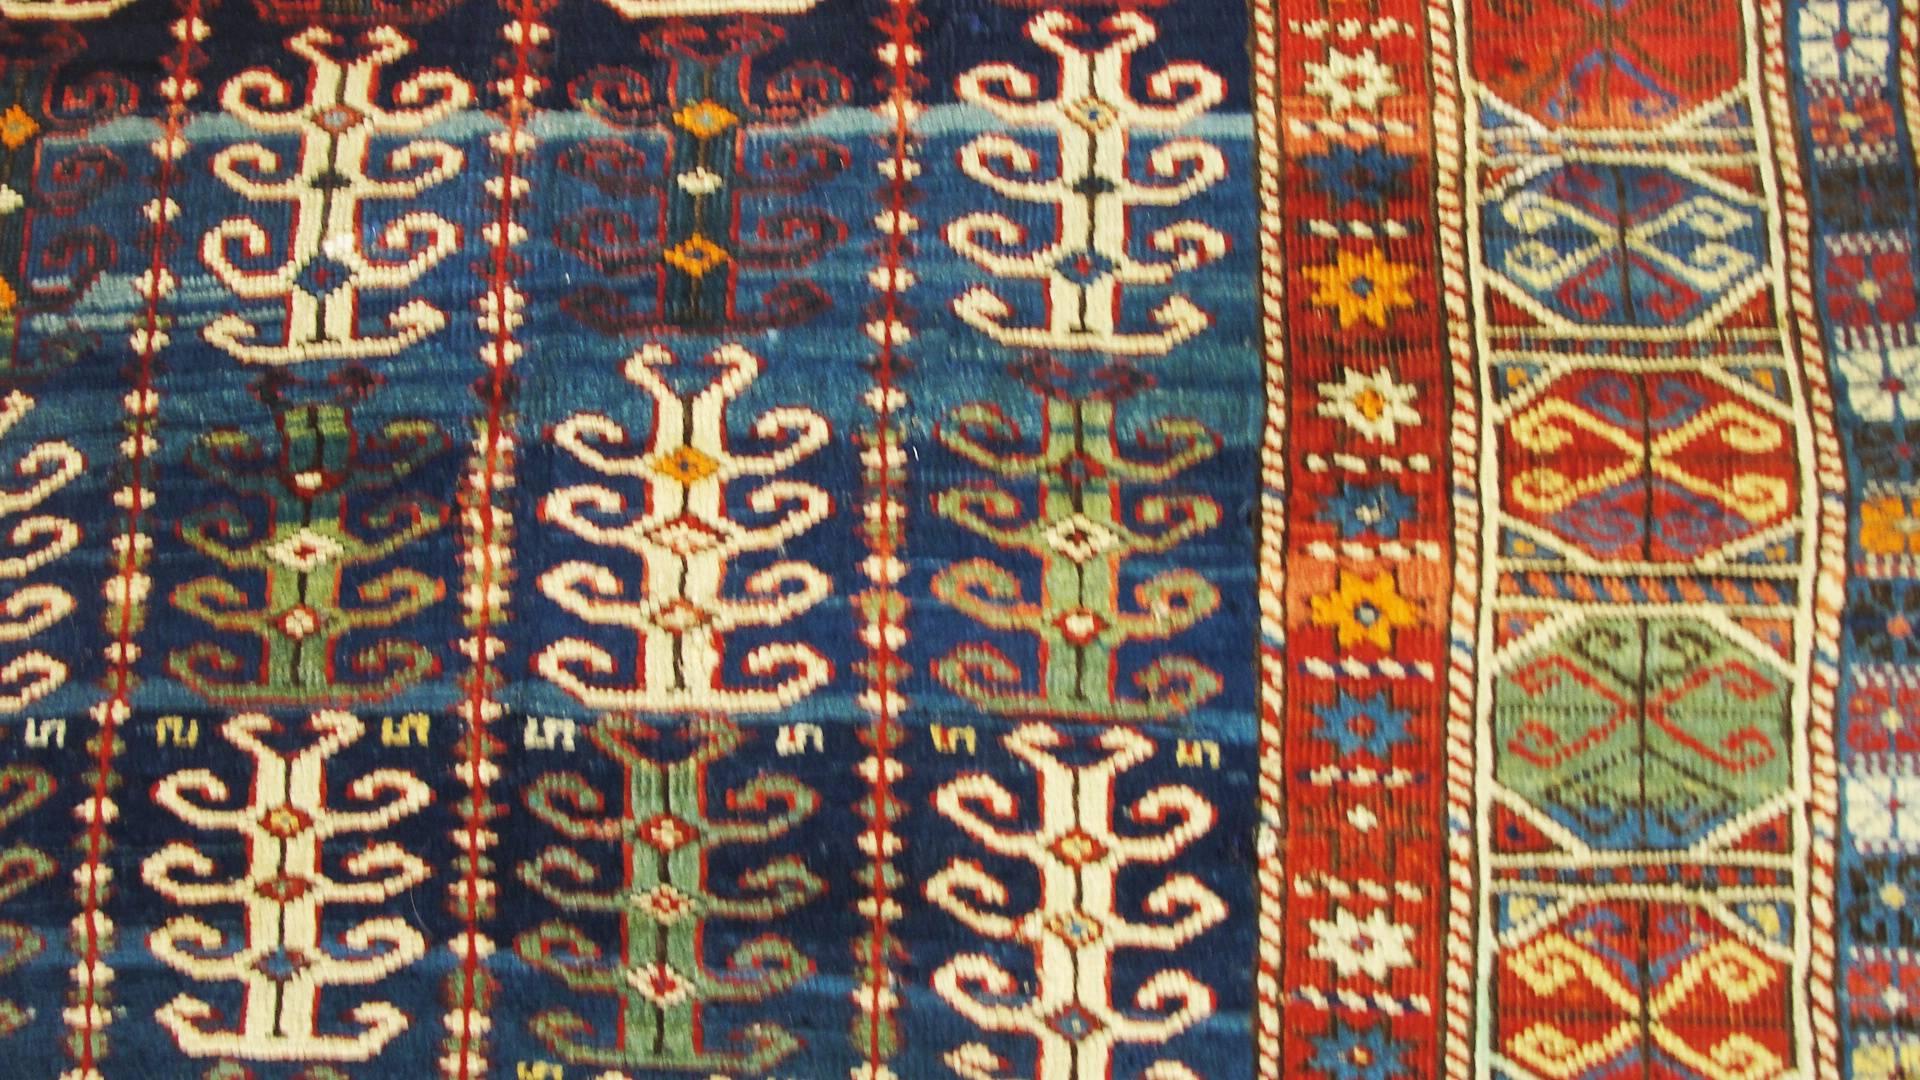 Antique Three of Life Long Kazak Rug, 4'3